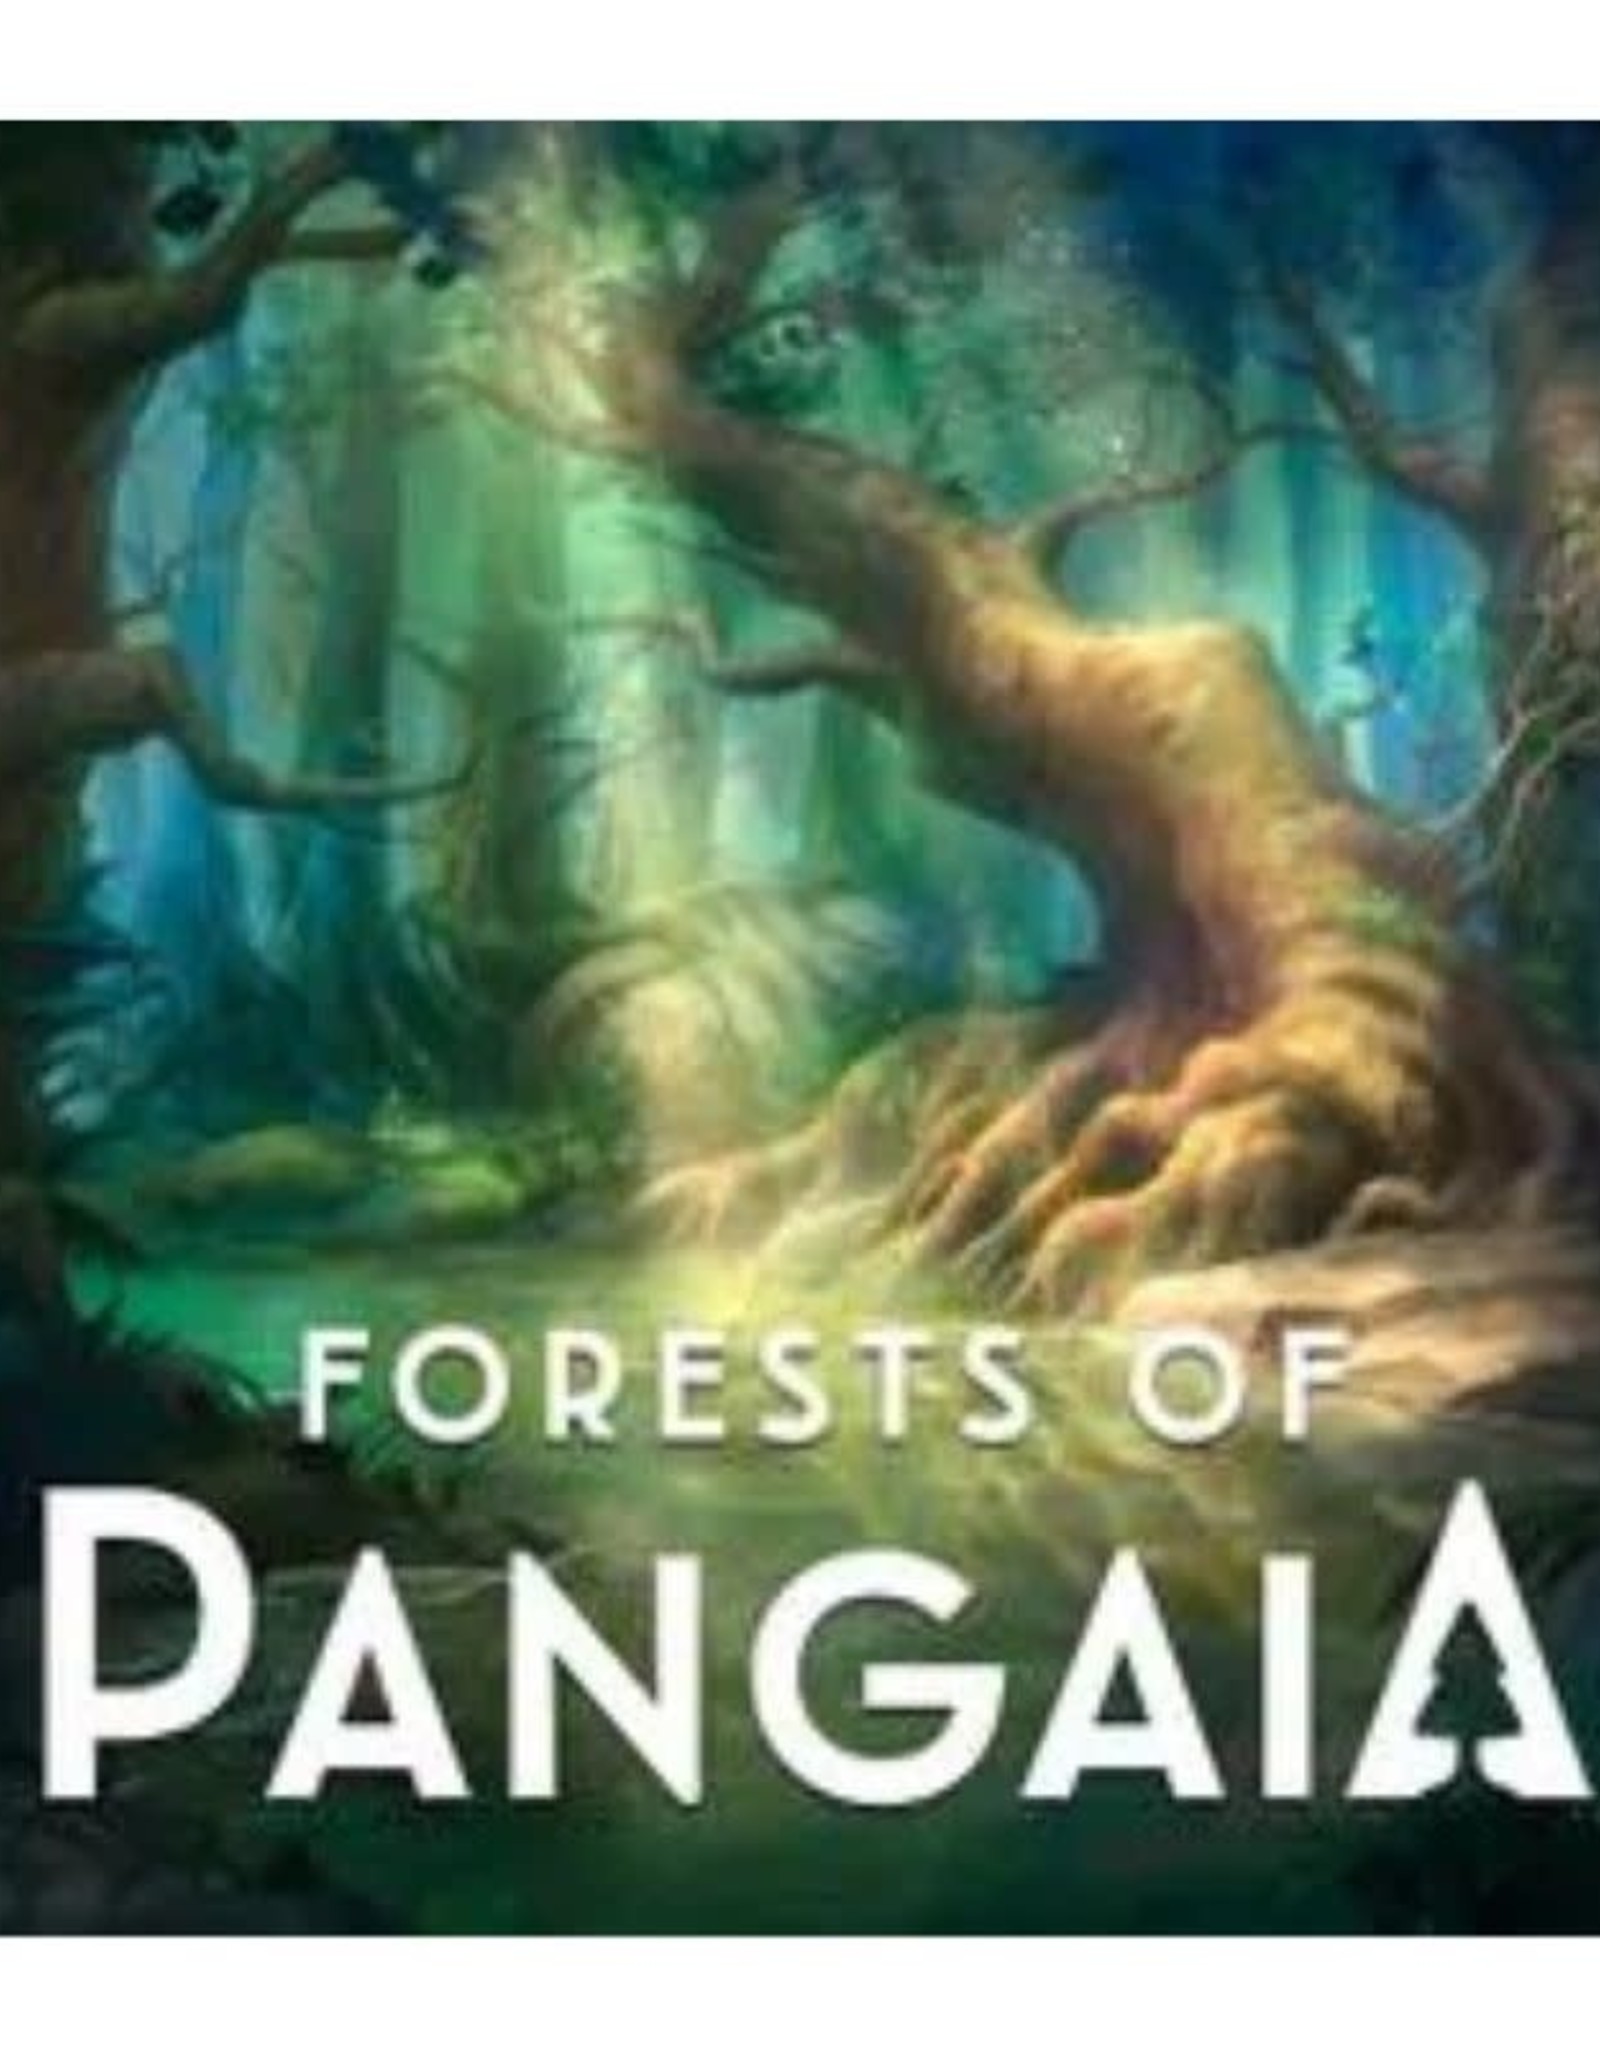 Pangaia Games Forests of Pangaia